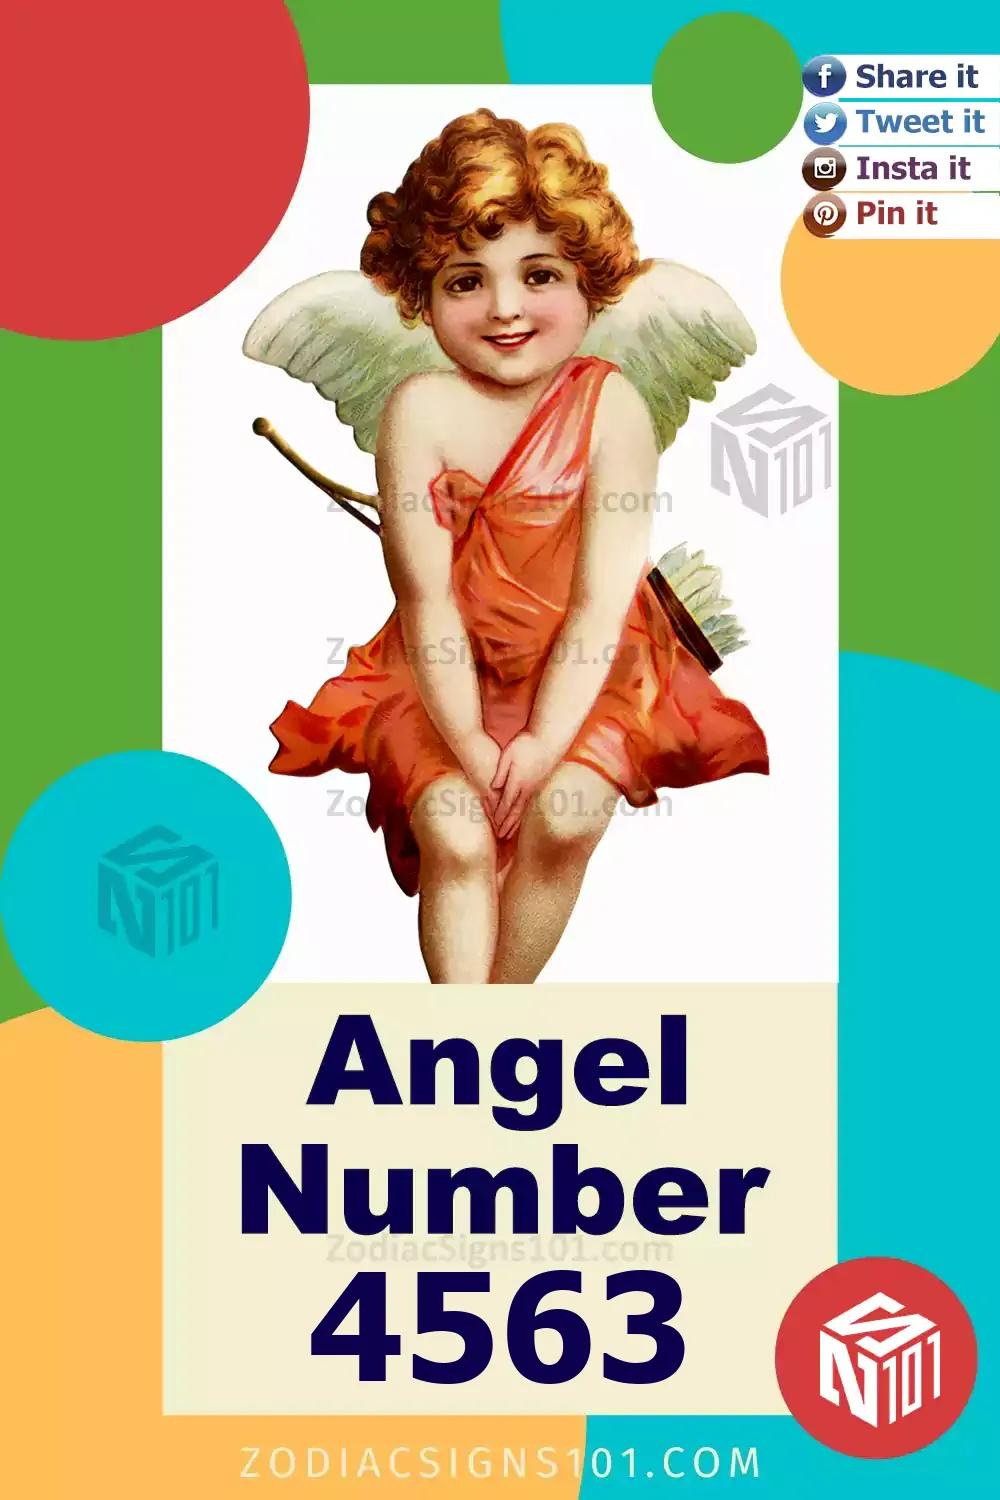 4563-Angel-Number-Meaning.jpg